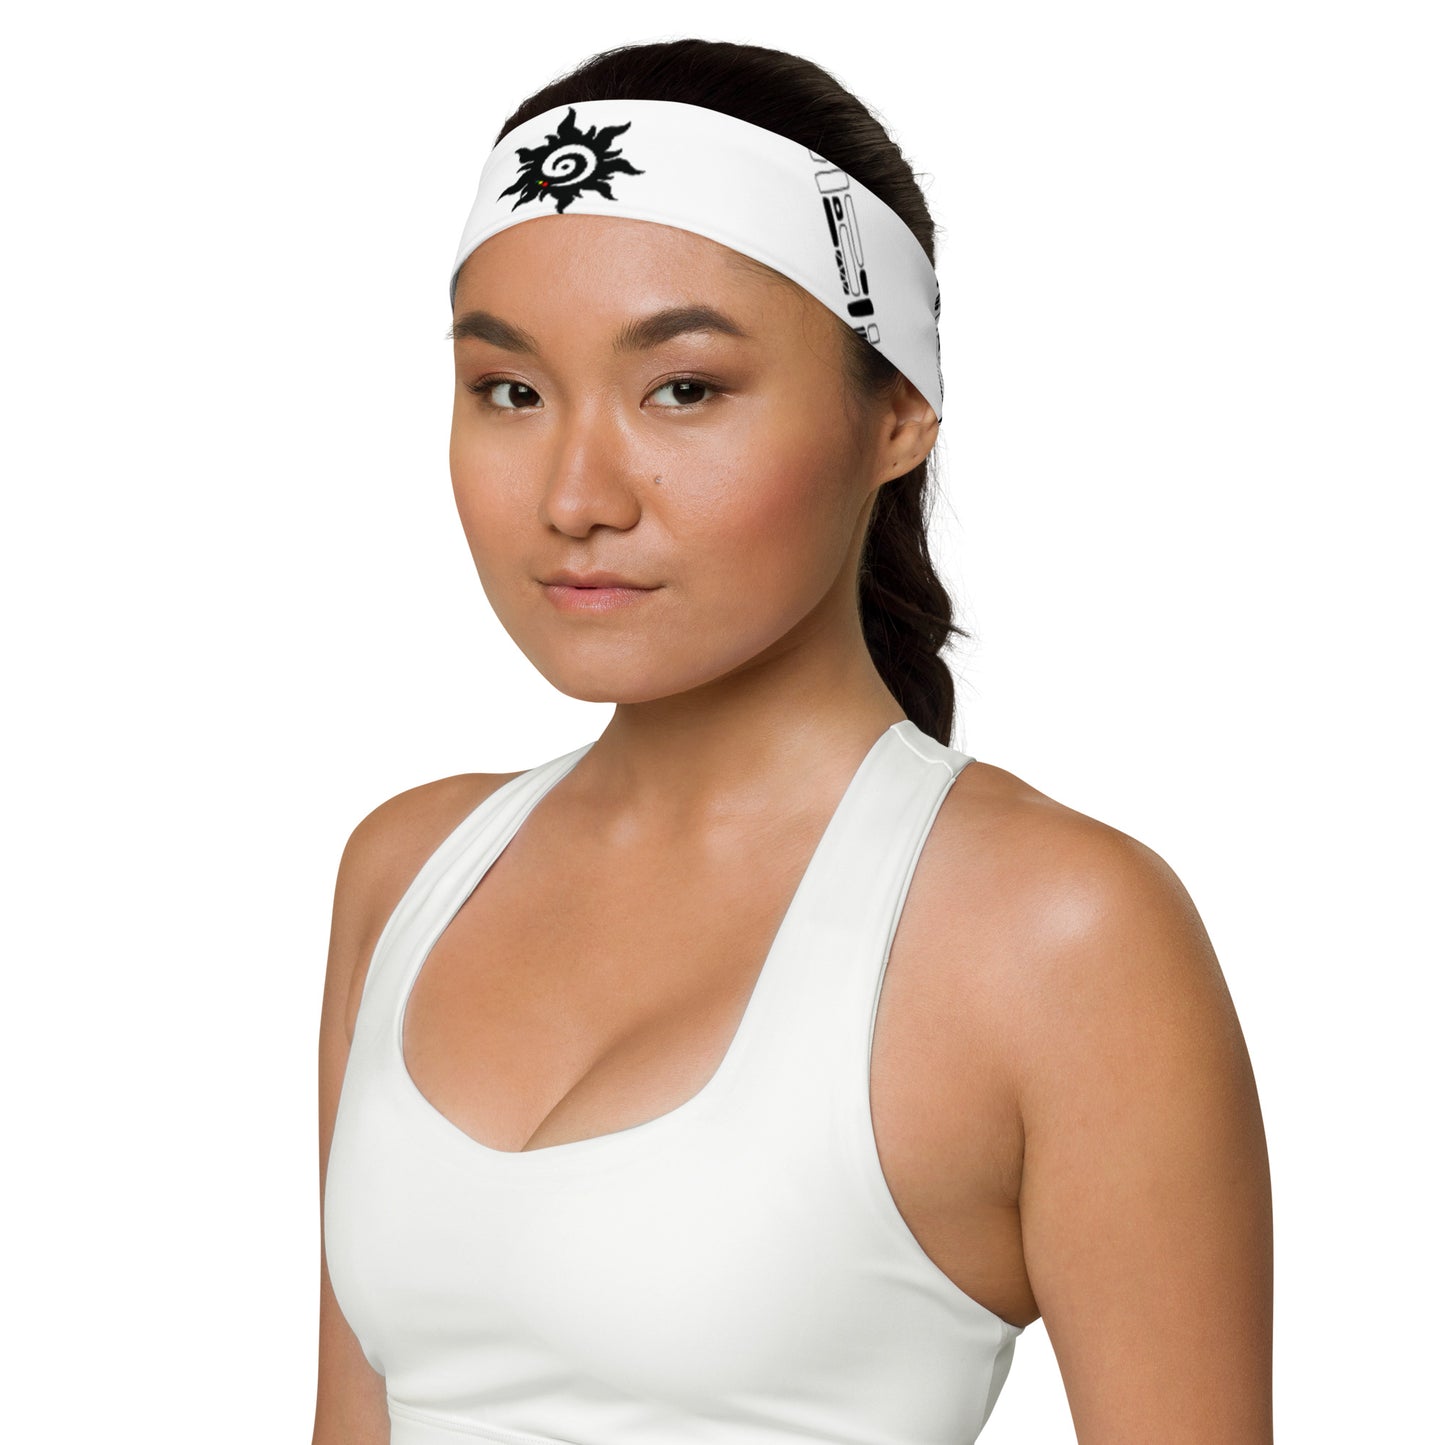 Action Sun Headband 1 / Sport hair accessories / hair band / Fitness hair bands.